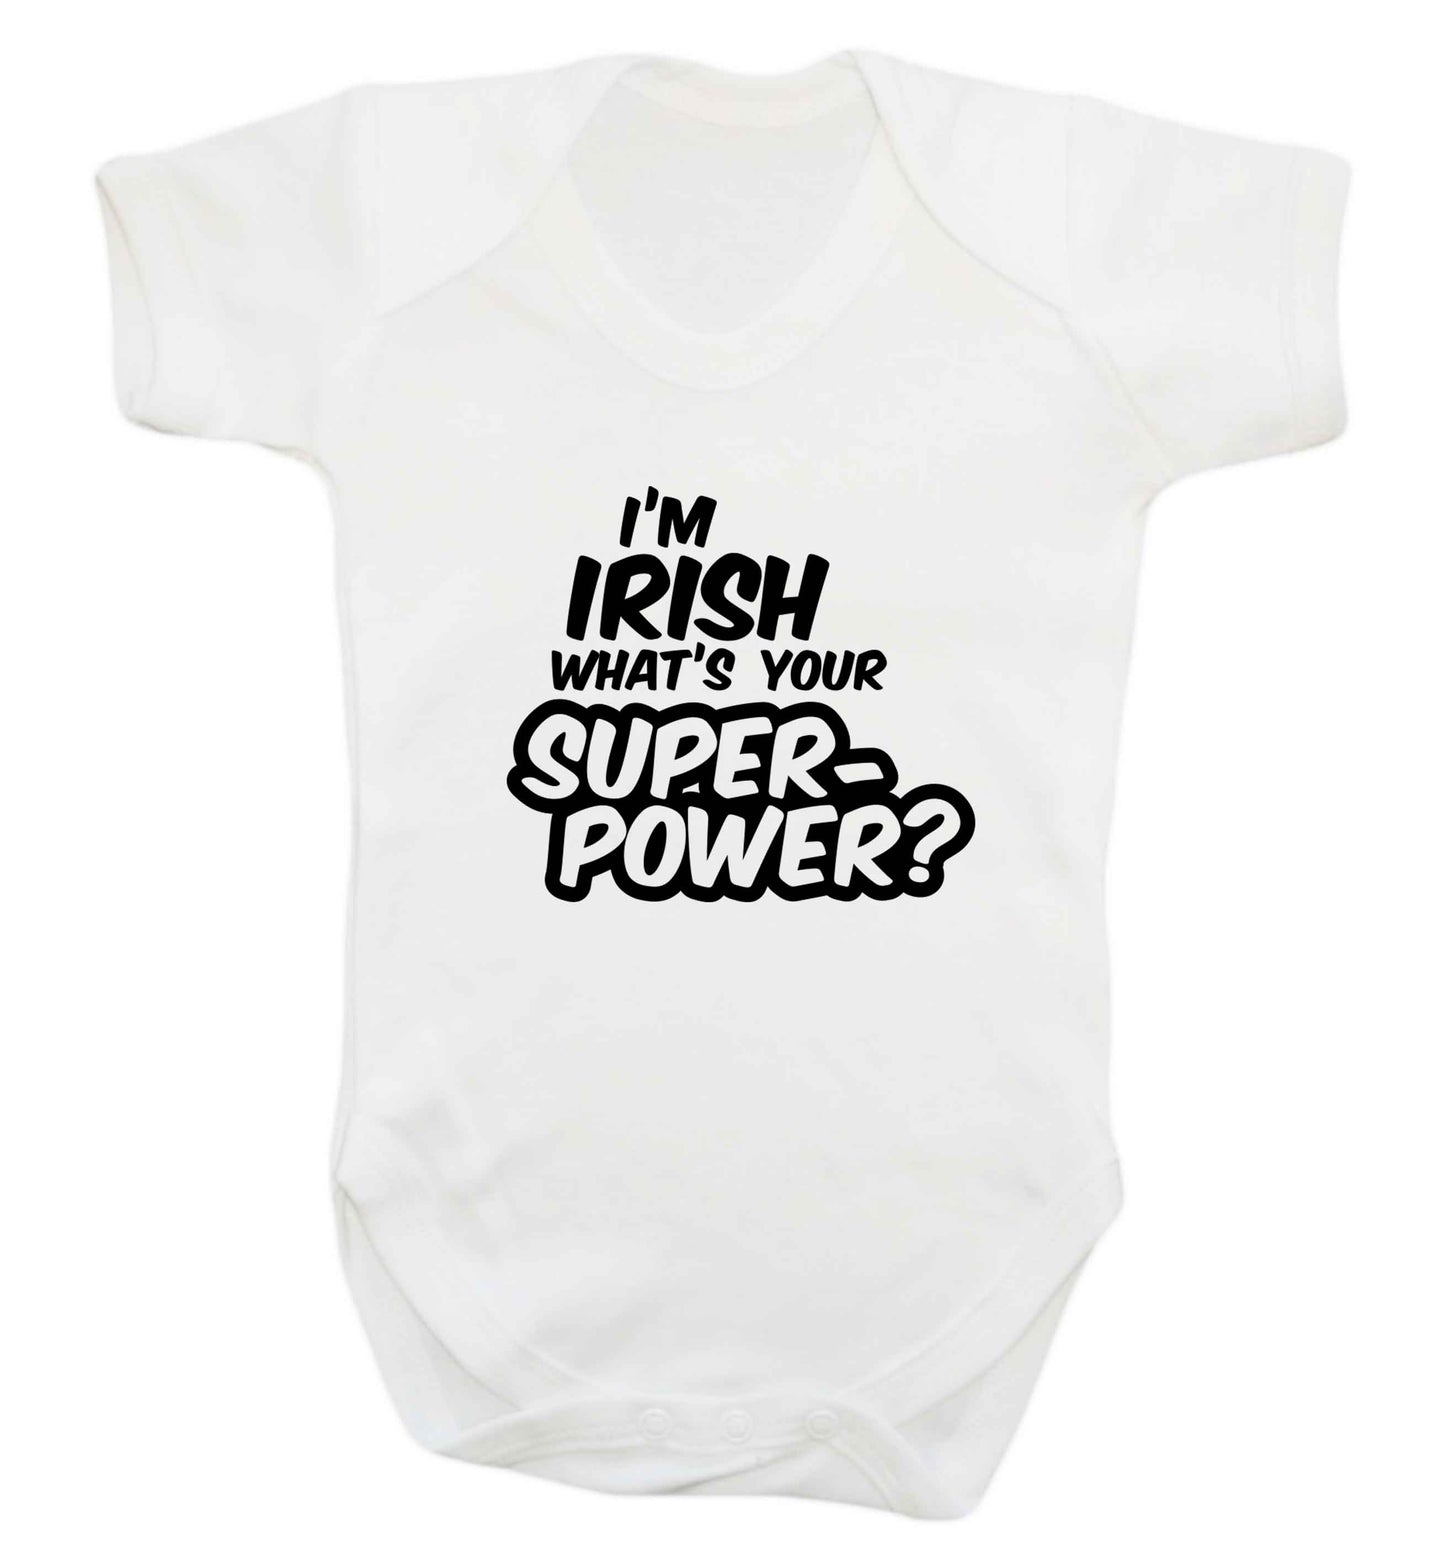 I'm Irish what's your superpower? baby vest white 18-24 months